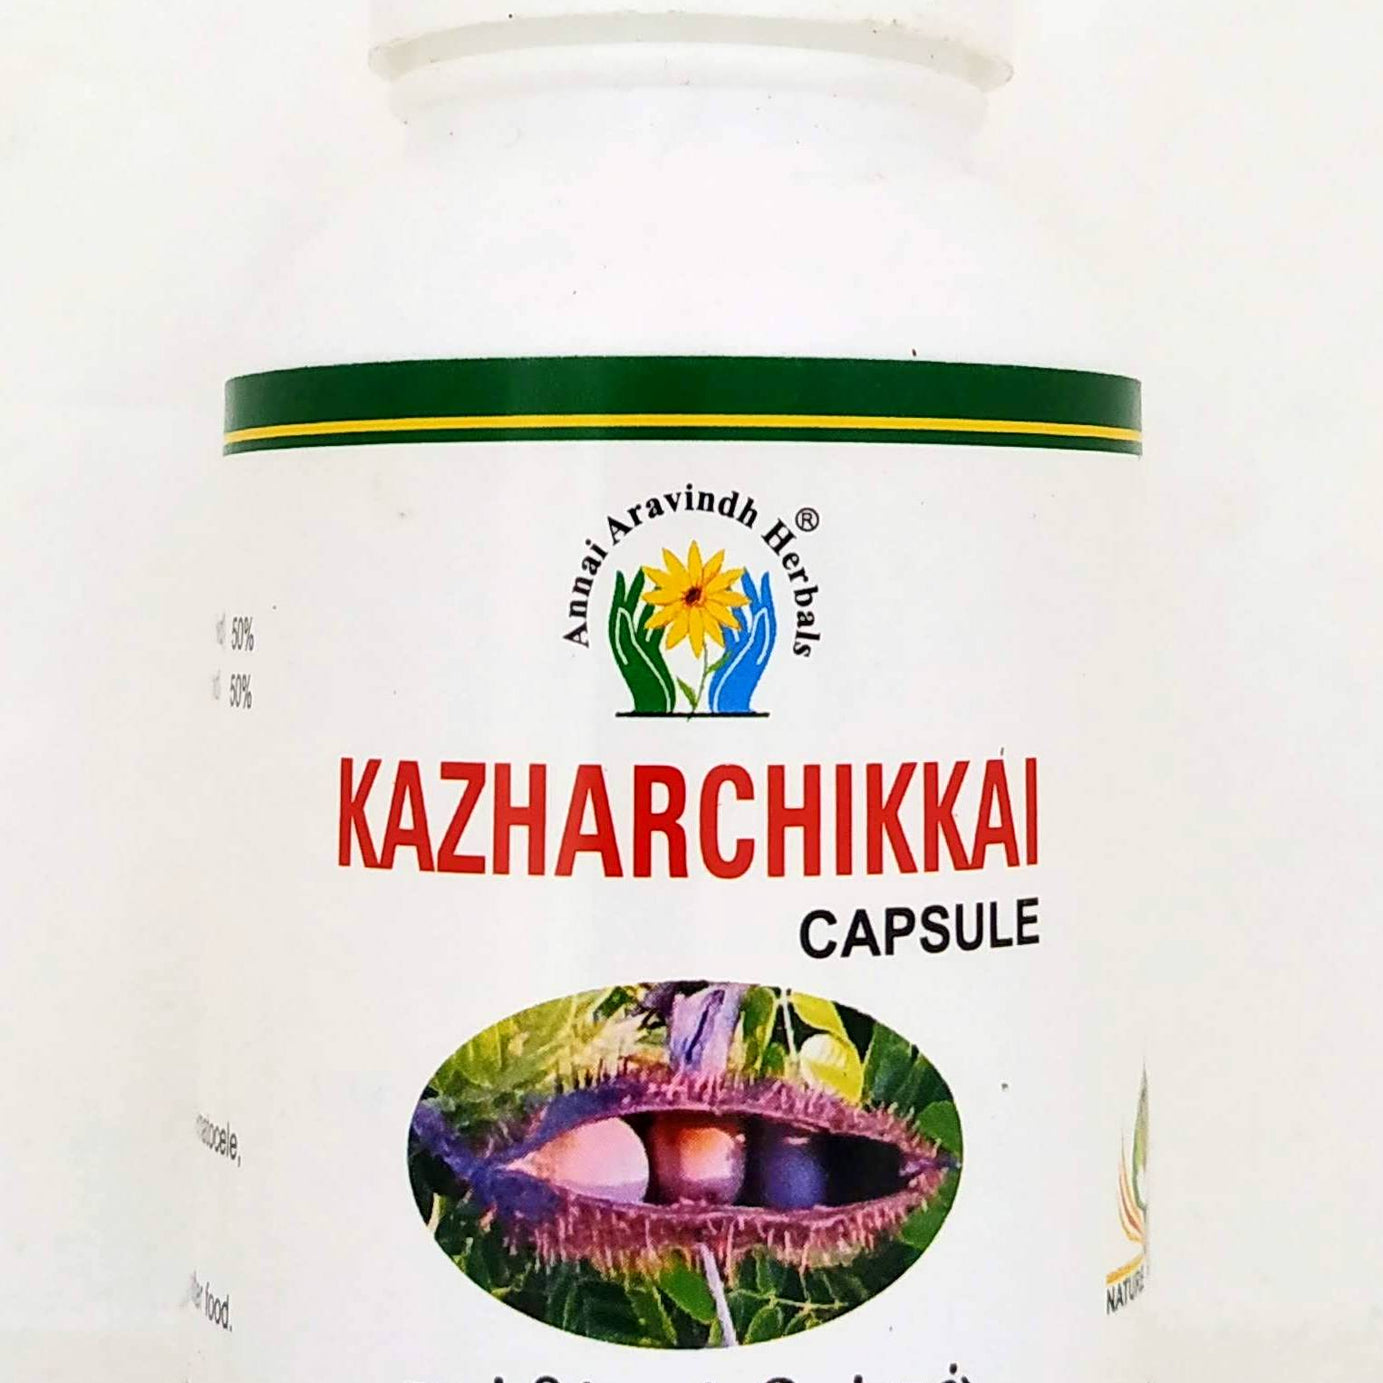 Shop Kazharchikkai capsules - 90capsules at price 200.00 from Annai Aravindh Online - Ayush Care